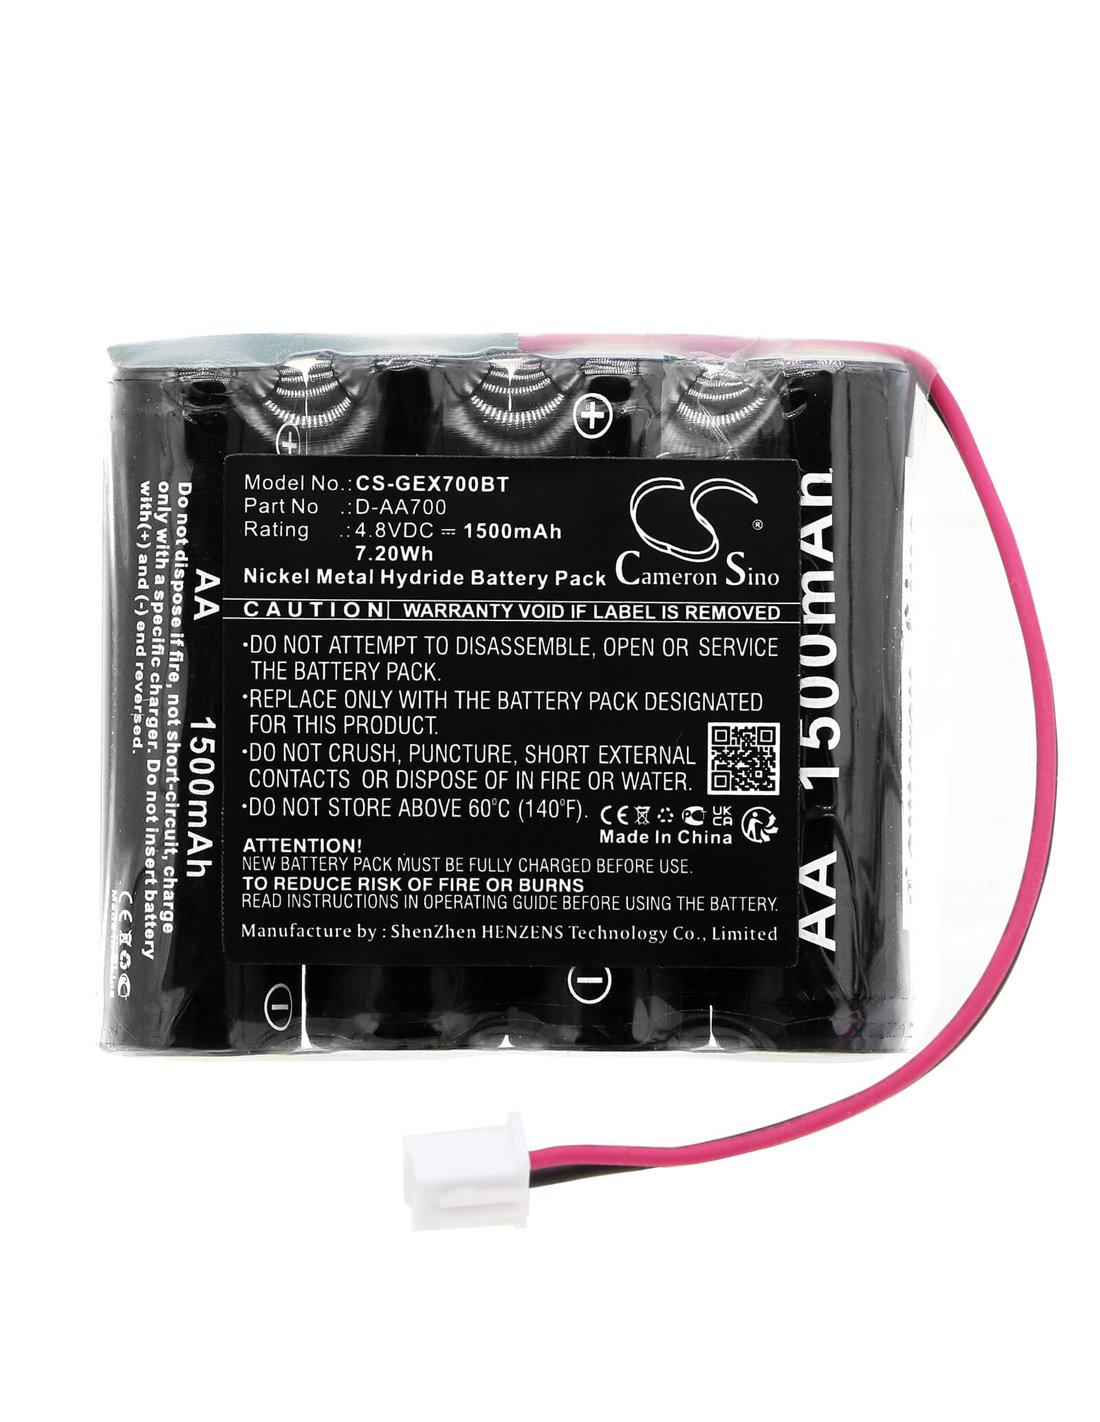 4.8V, Ni-MH, 1500mAh, Battery fits Ge, Control Panel, Simon Home Security, 7.20Wh